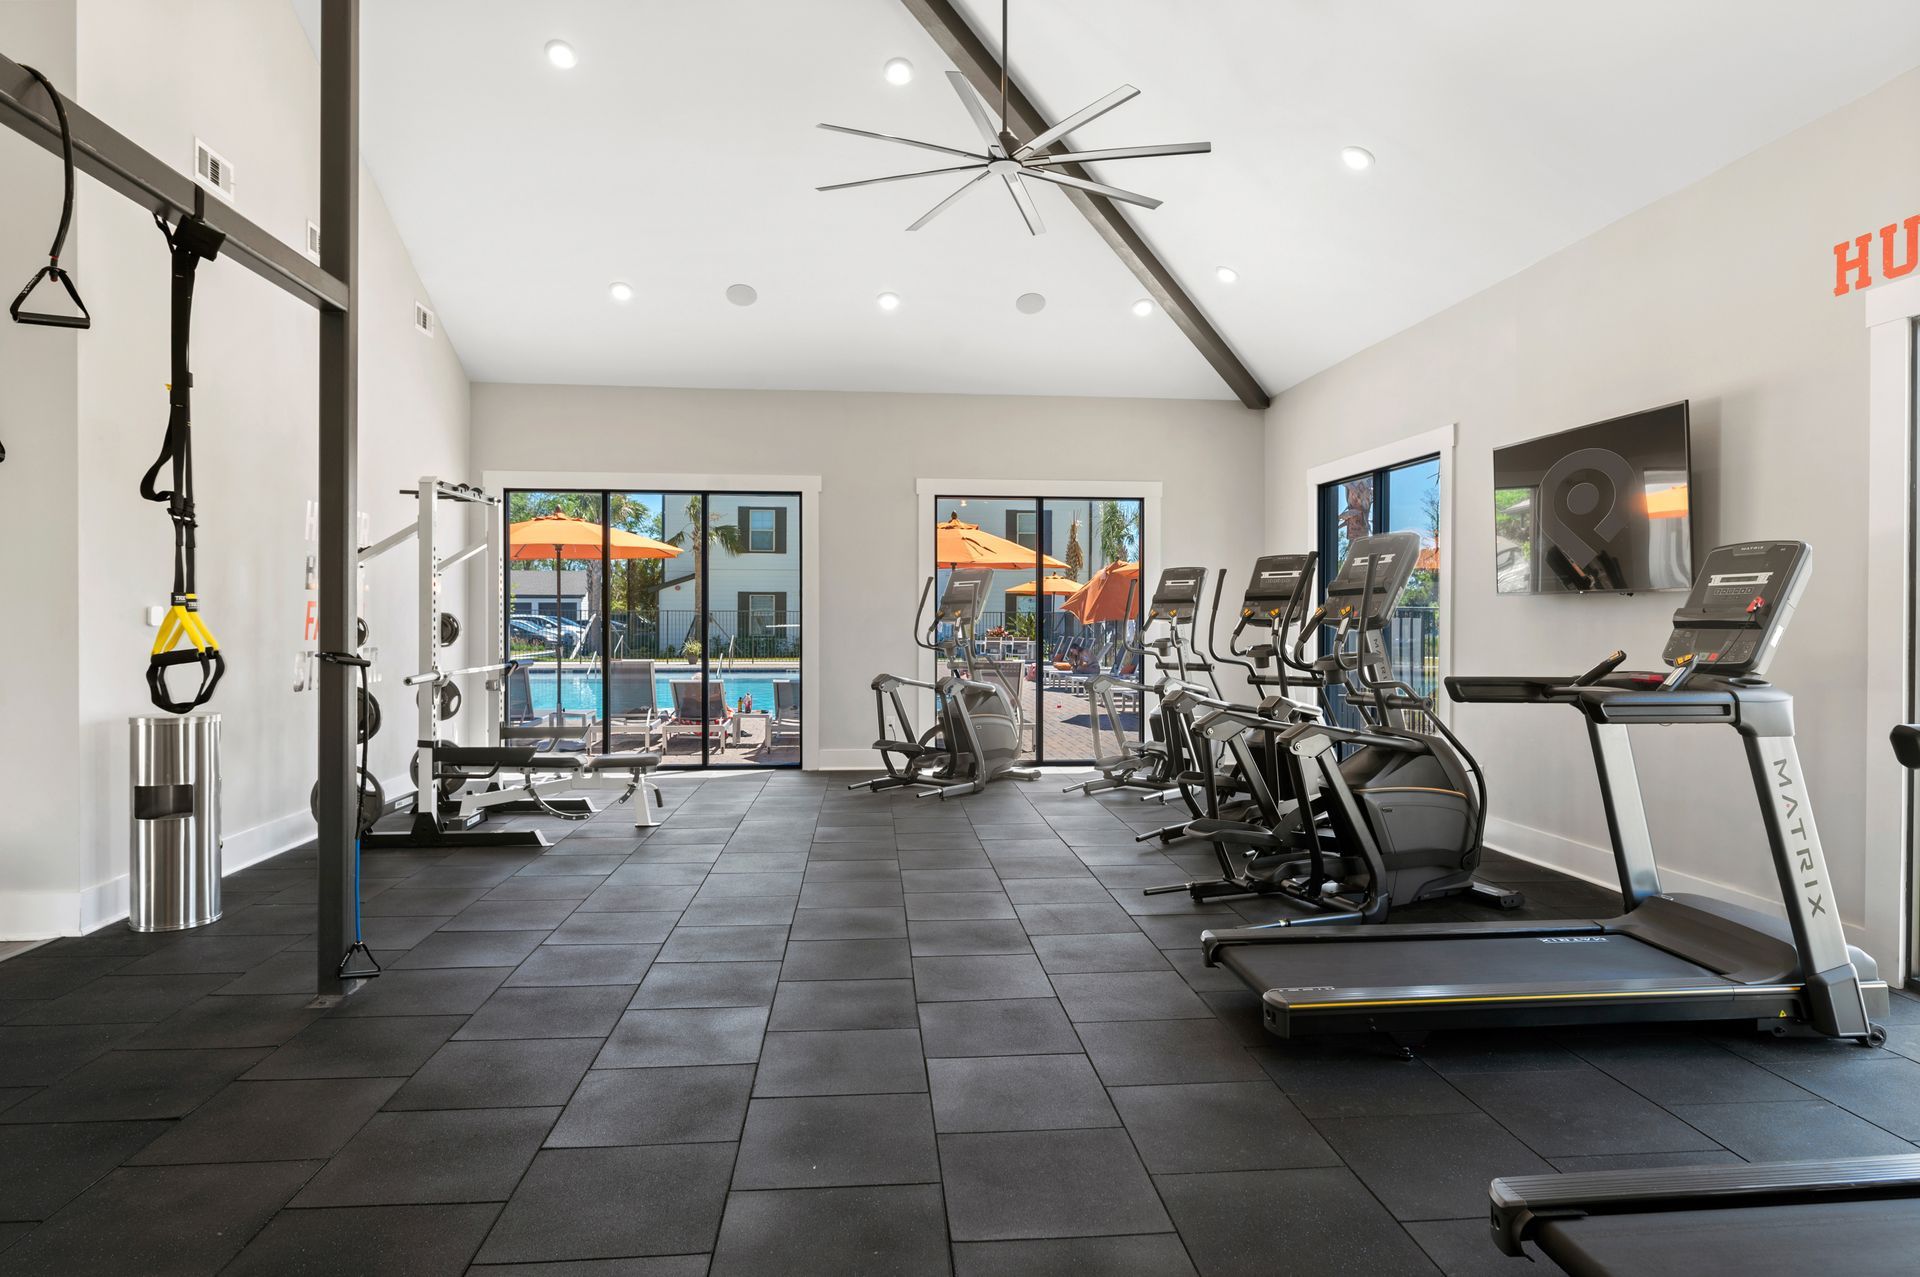 Pointe Grand Warner Robins | Inside Fitness Area